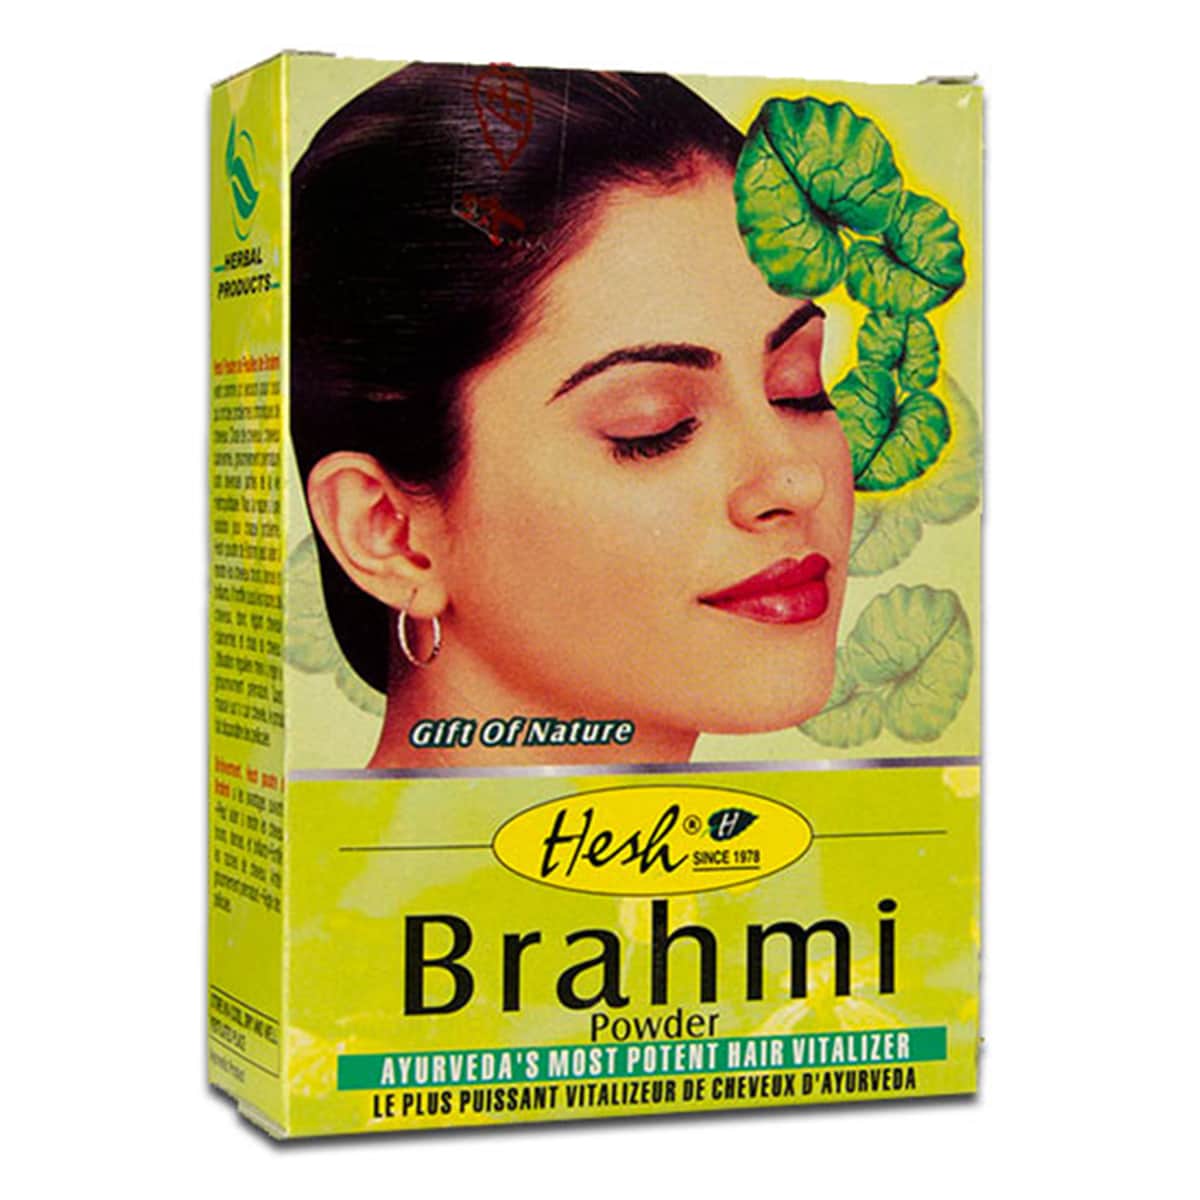 Buy Hesh Brahmi Powder - 100 gm